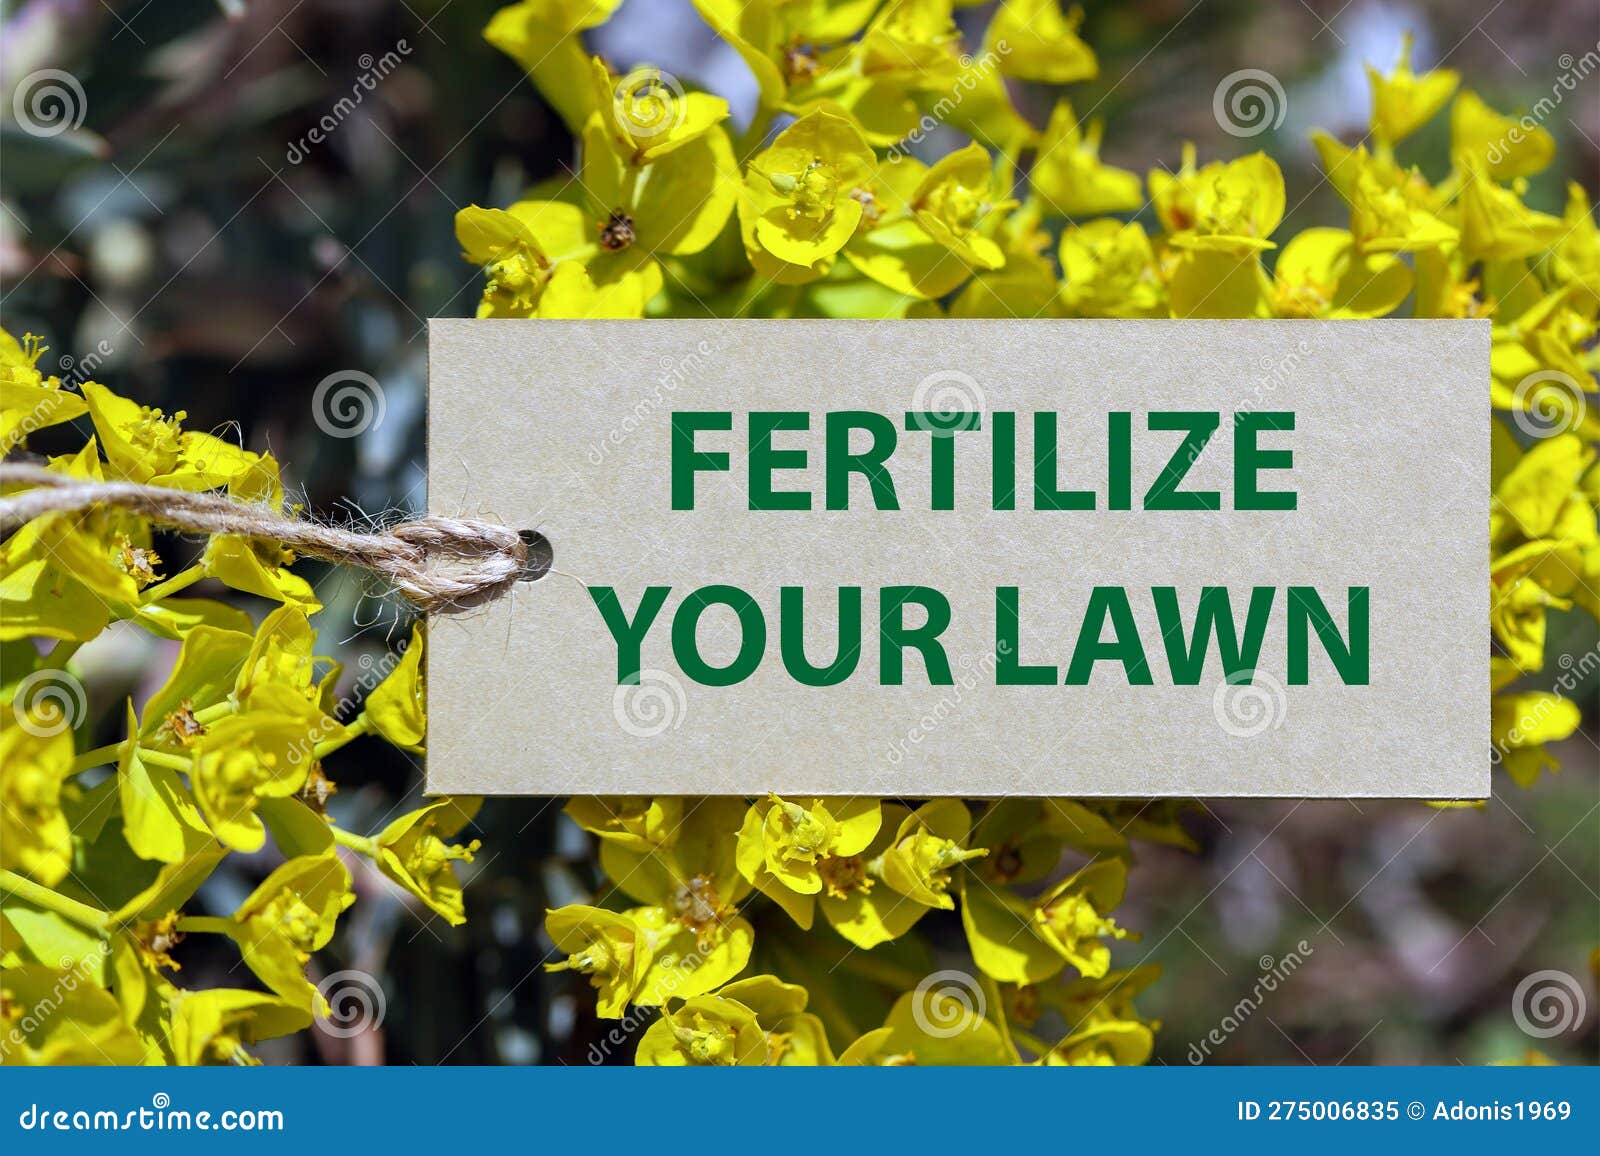 fertilize your lawn word on paper